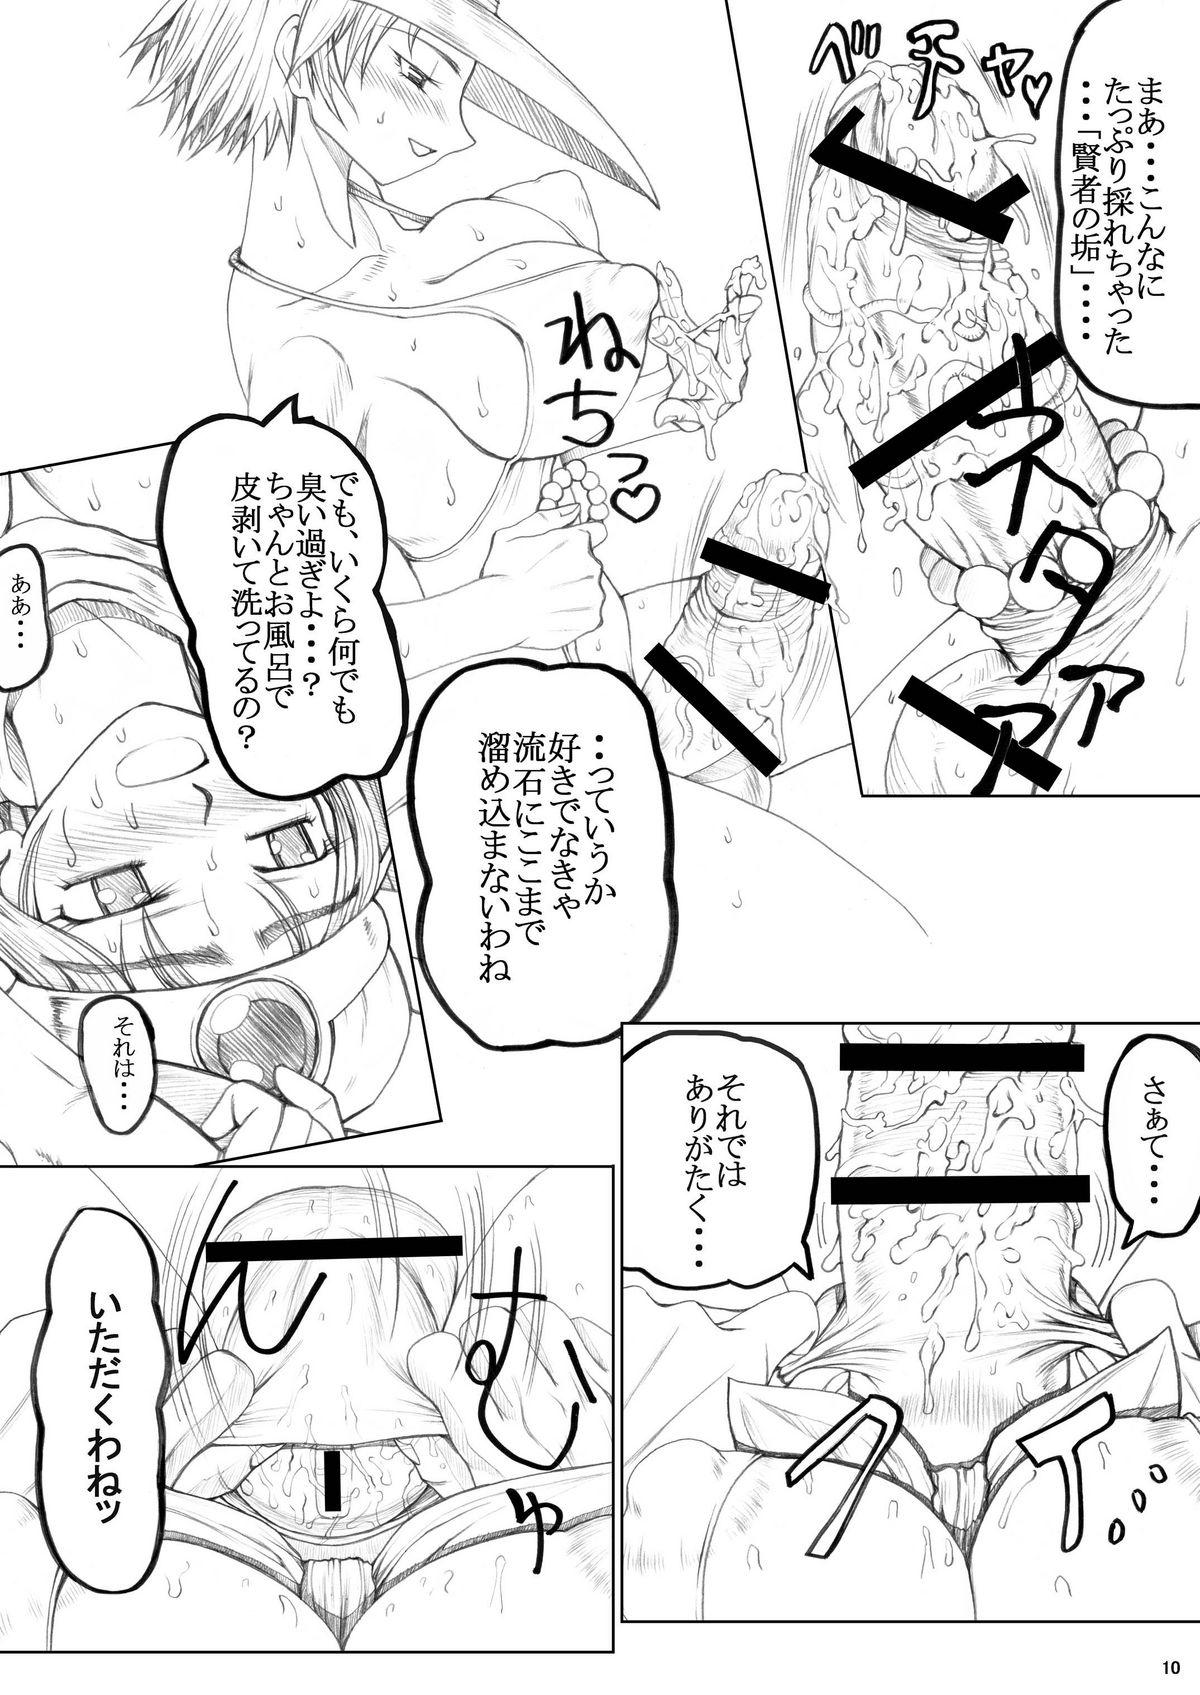 Titties Eikyuushi - Dragon quest iii Nice - Page 10